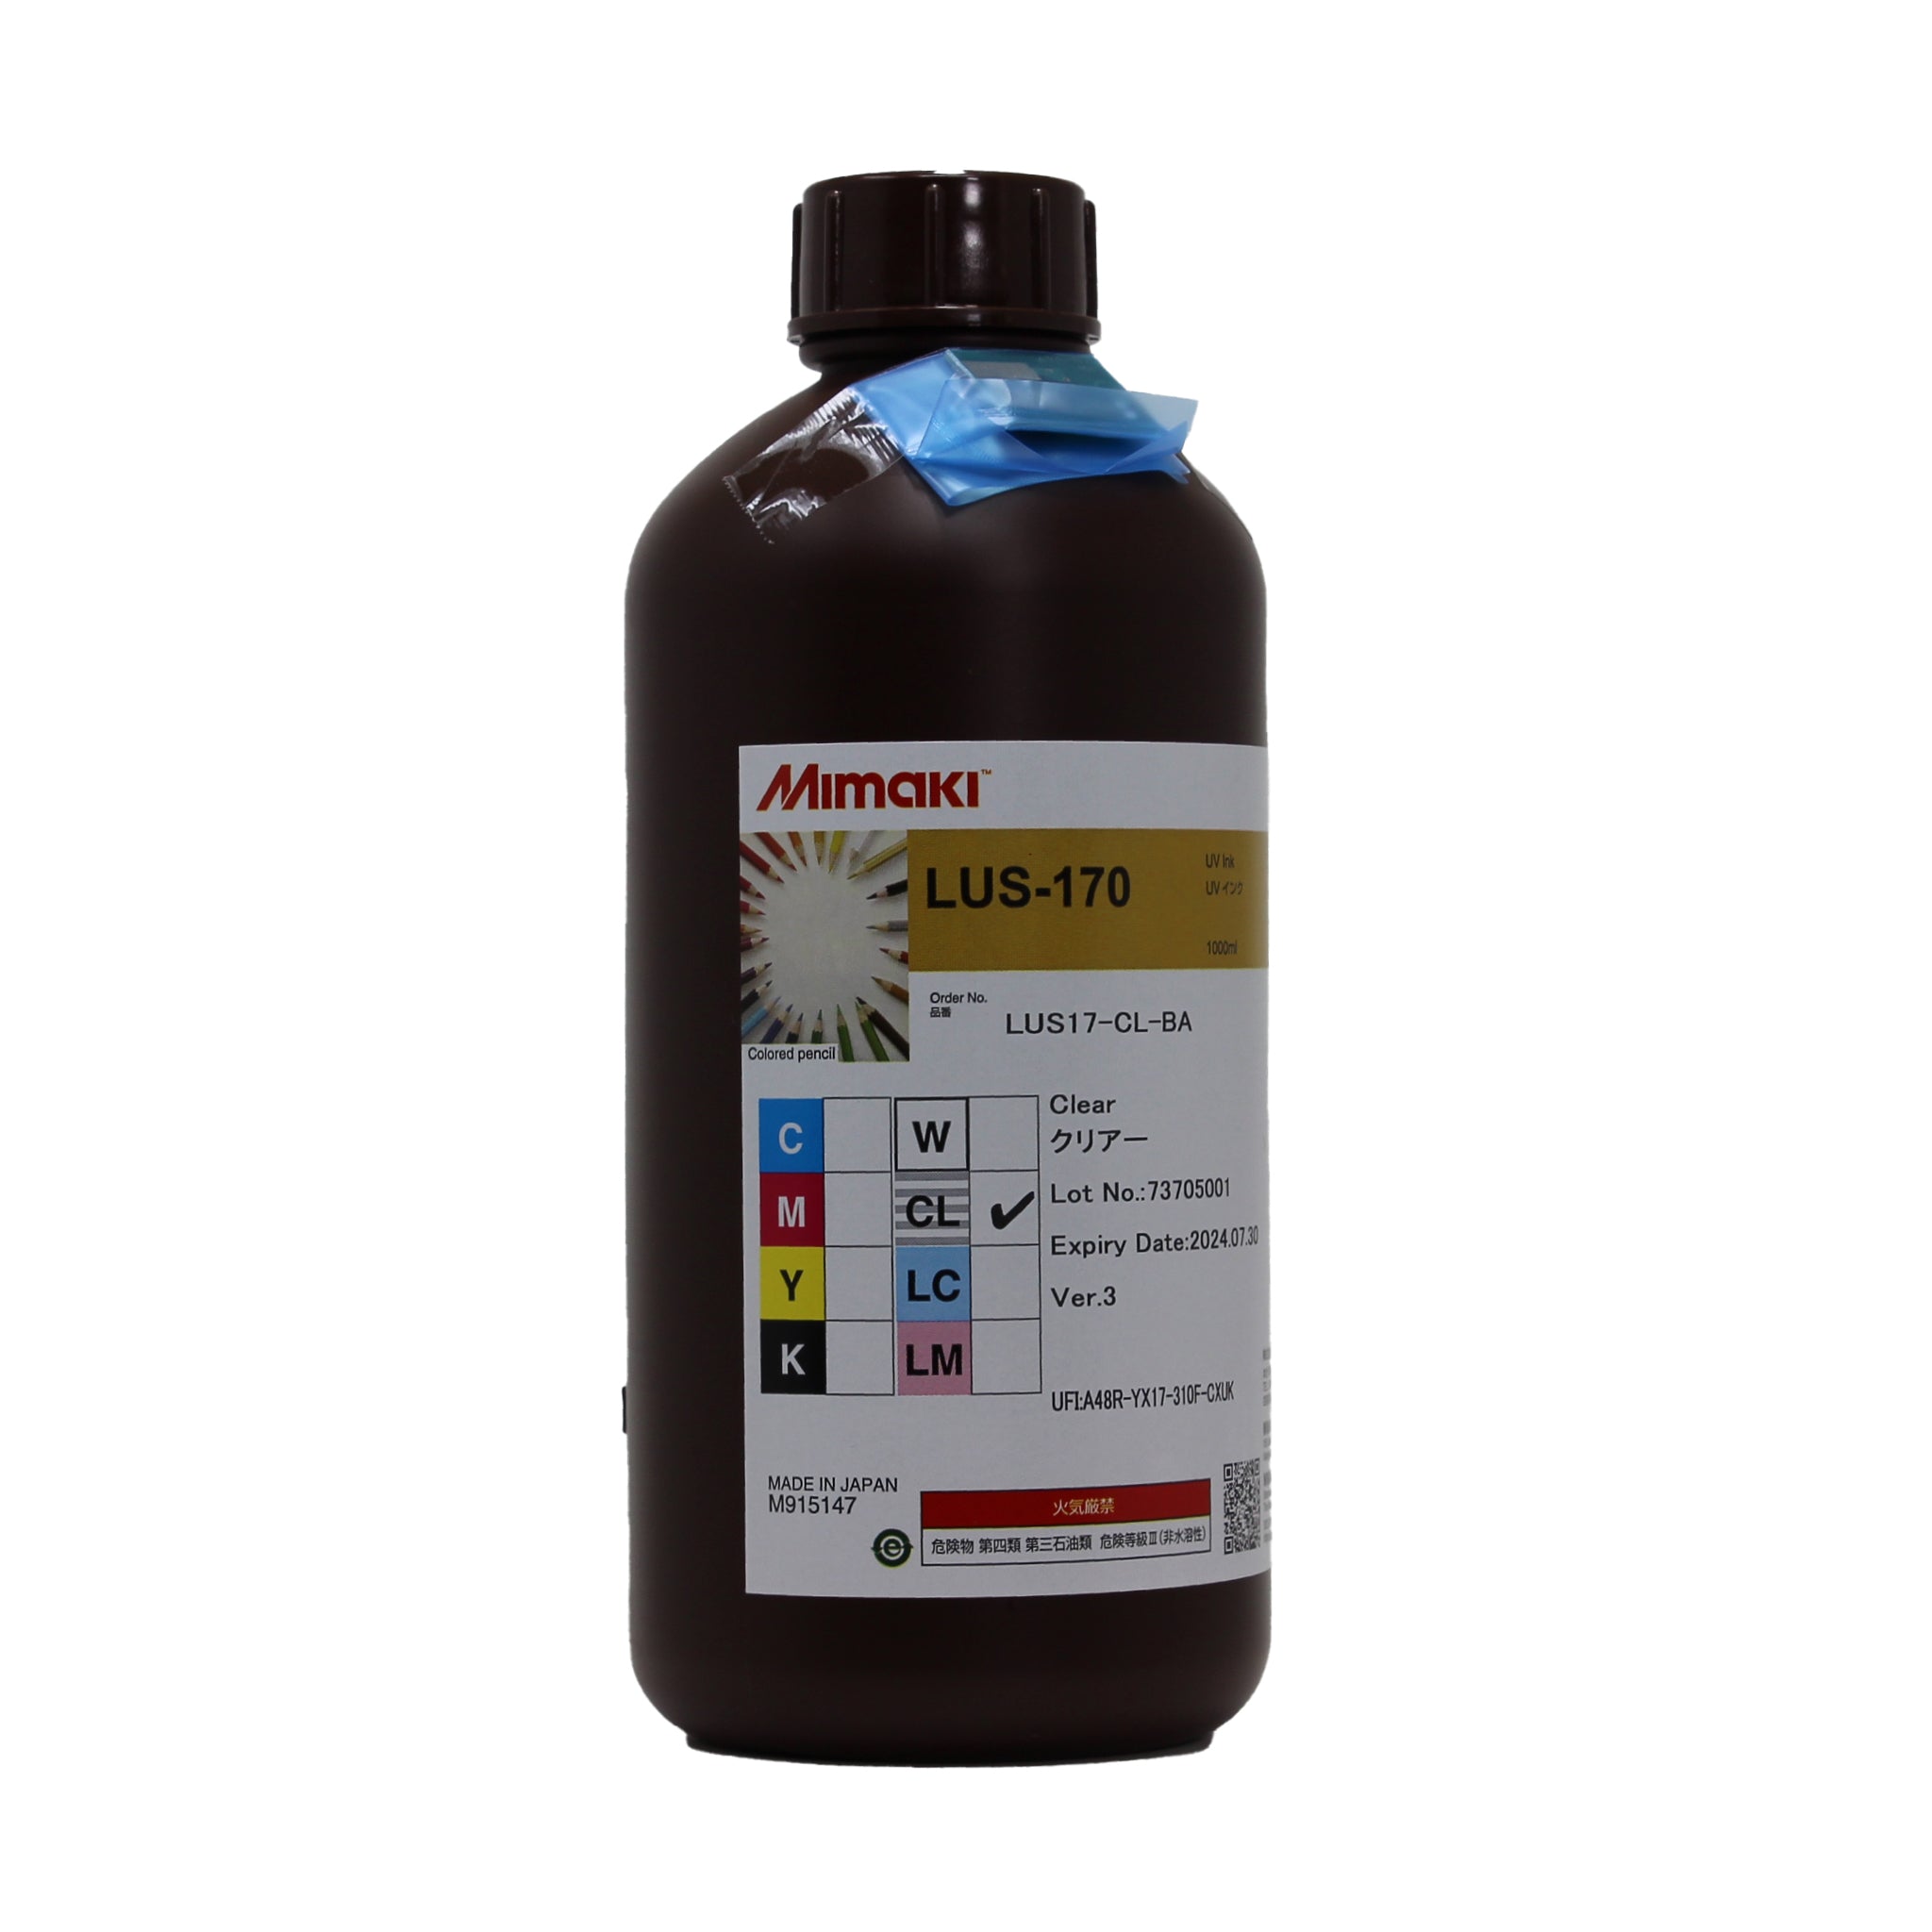 Mimaki LUS-170 UV Ink bottle